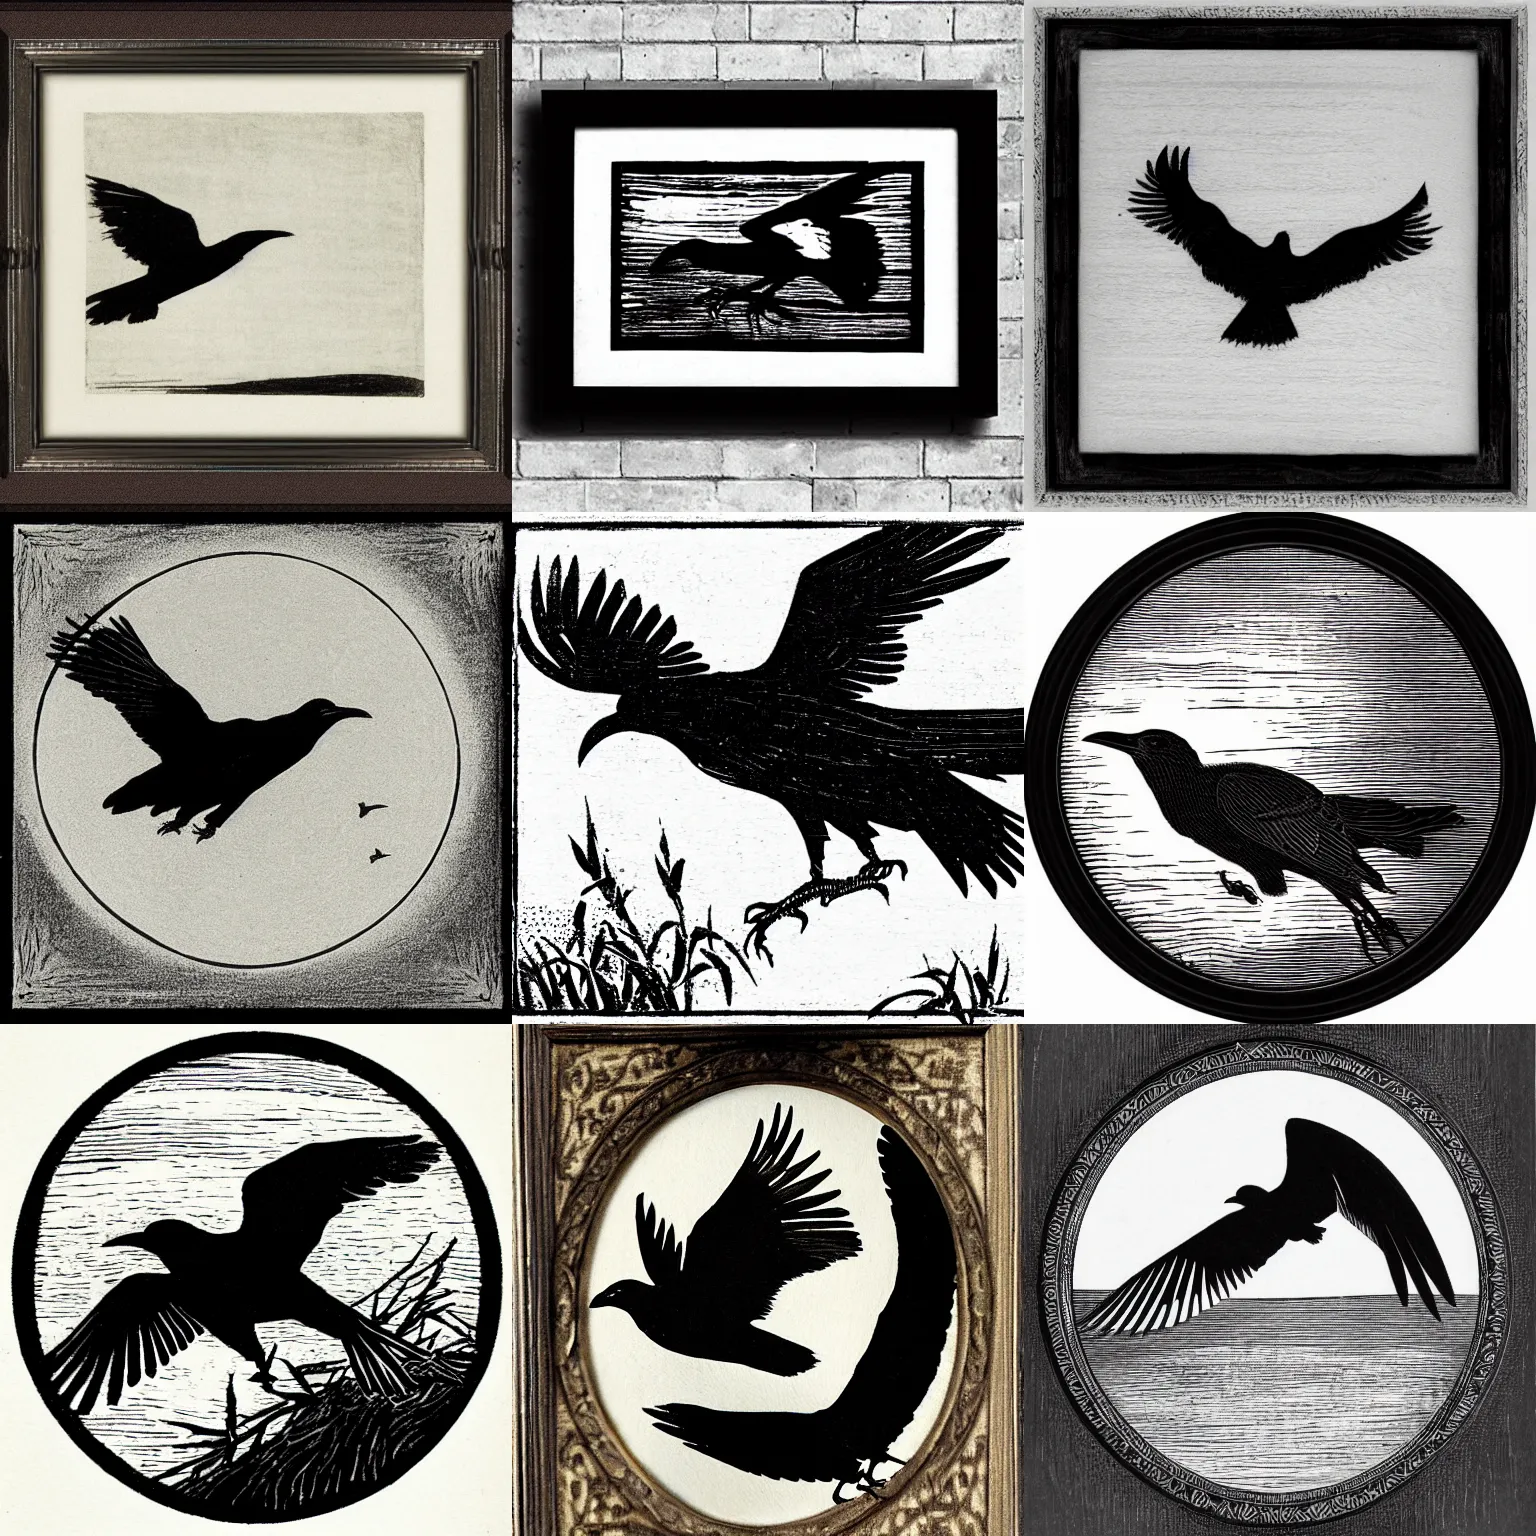 Prompt: tonalist woodcut of crow in flight, monochrome, in circular frame